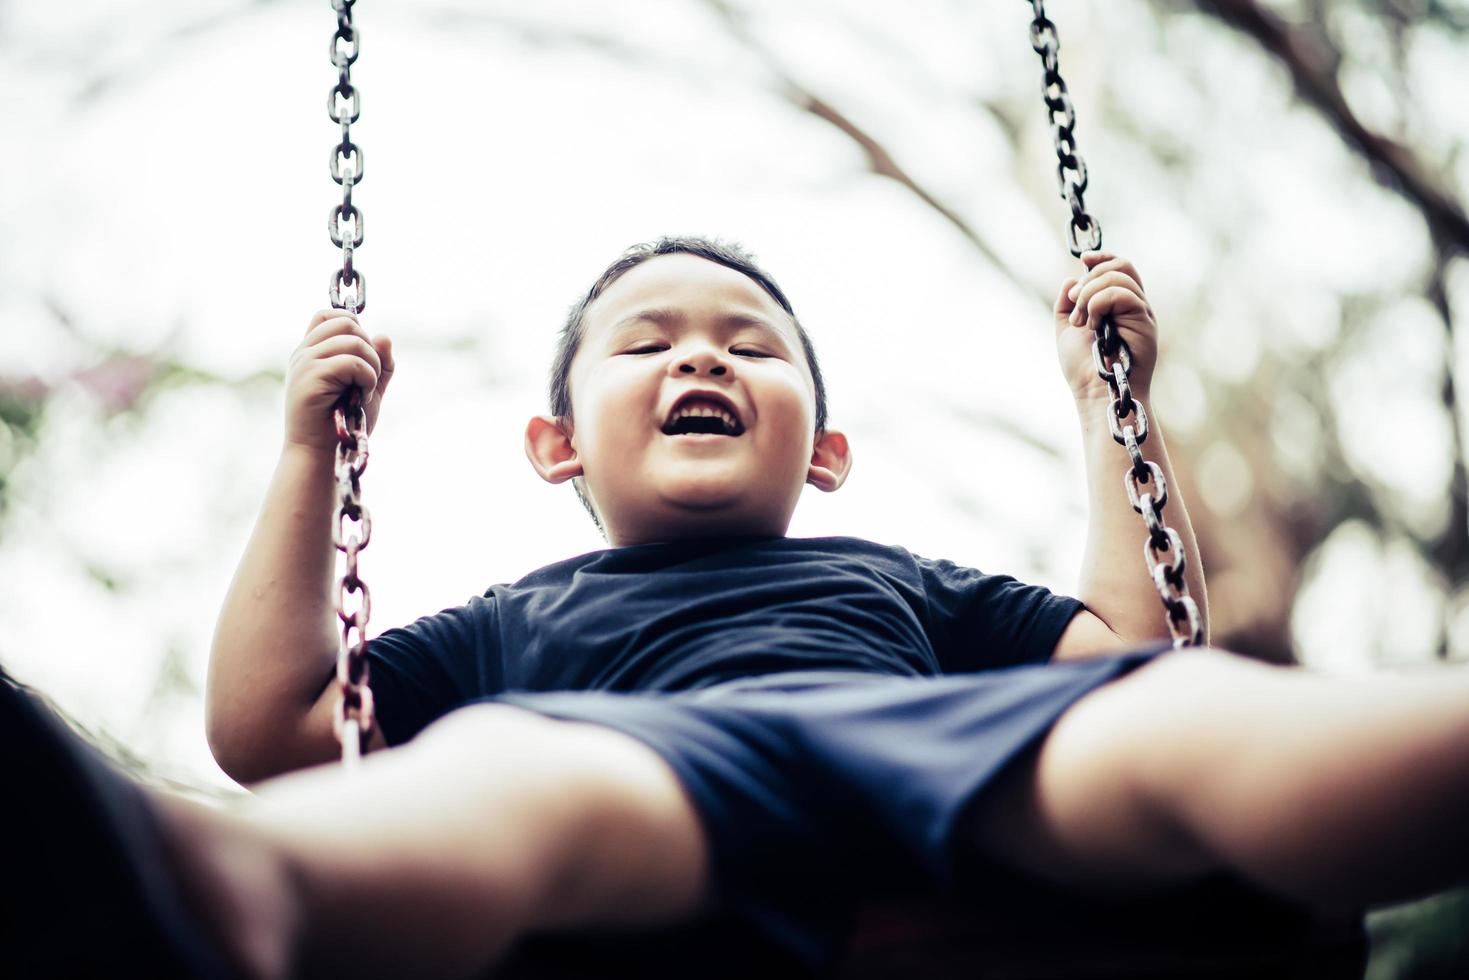 Adorable little boy having fun on a swing outdoors photo